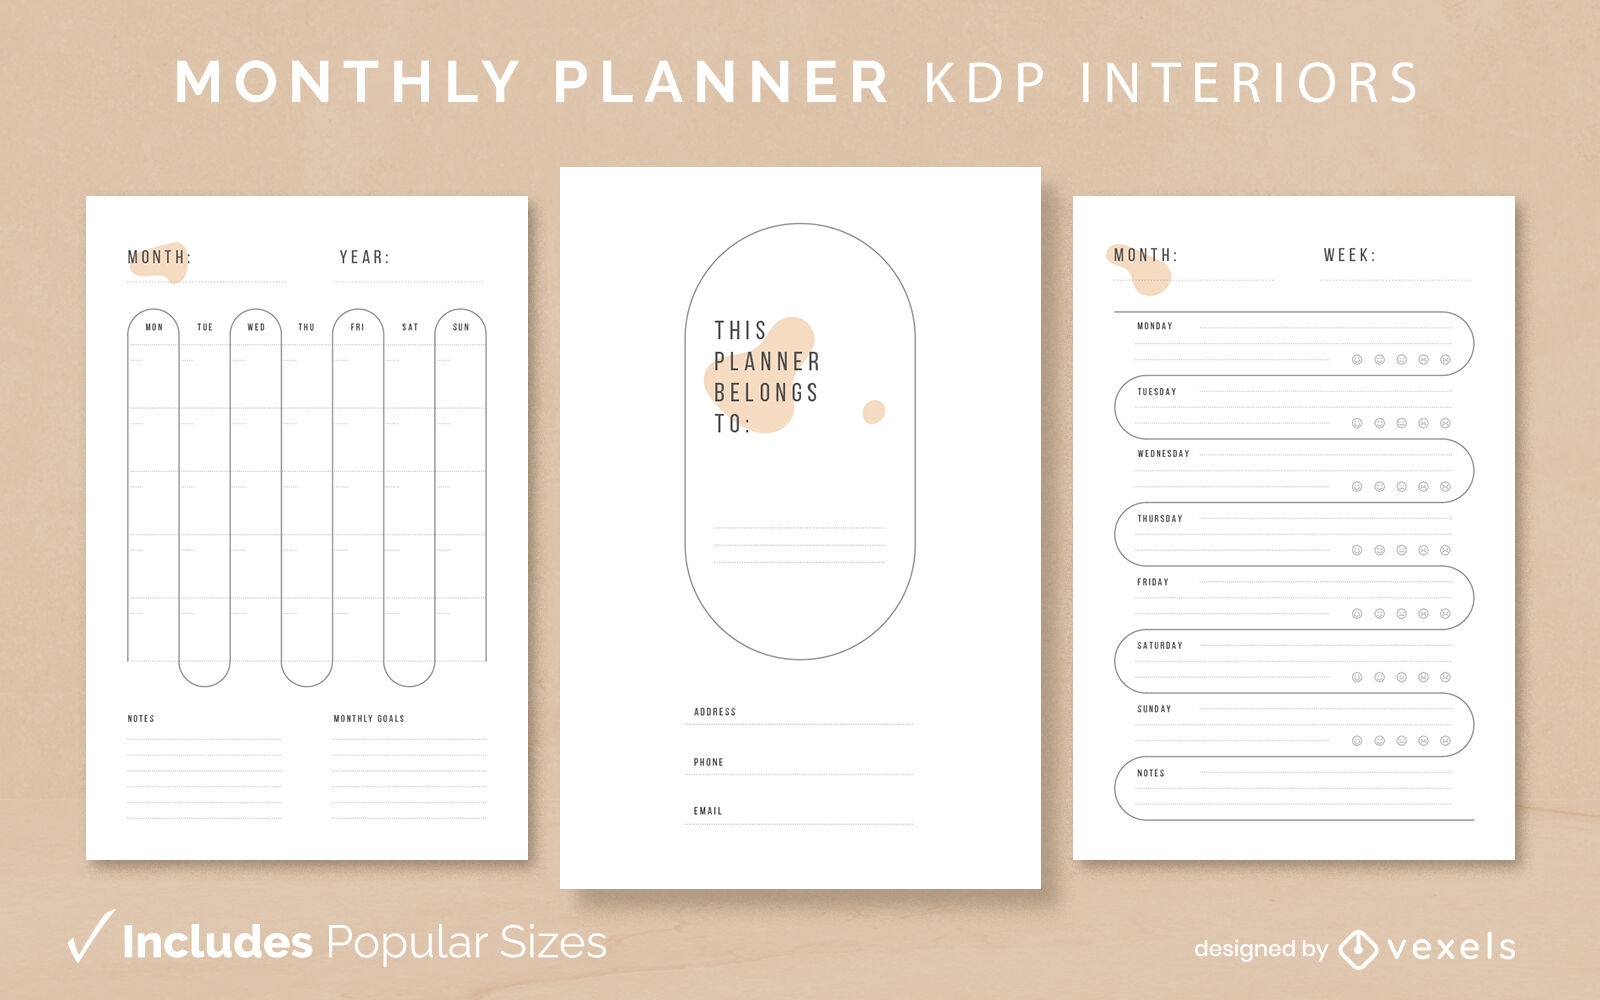 Planejador mensal modelo minimalista de design de interiores KDP